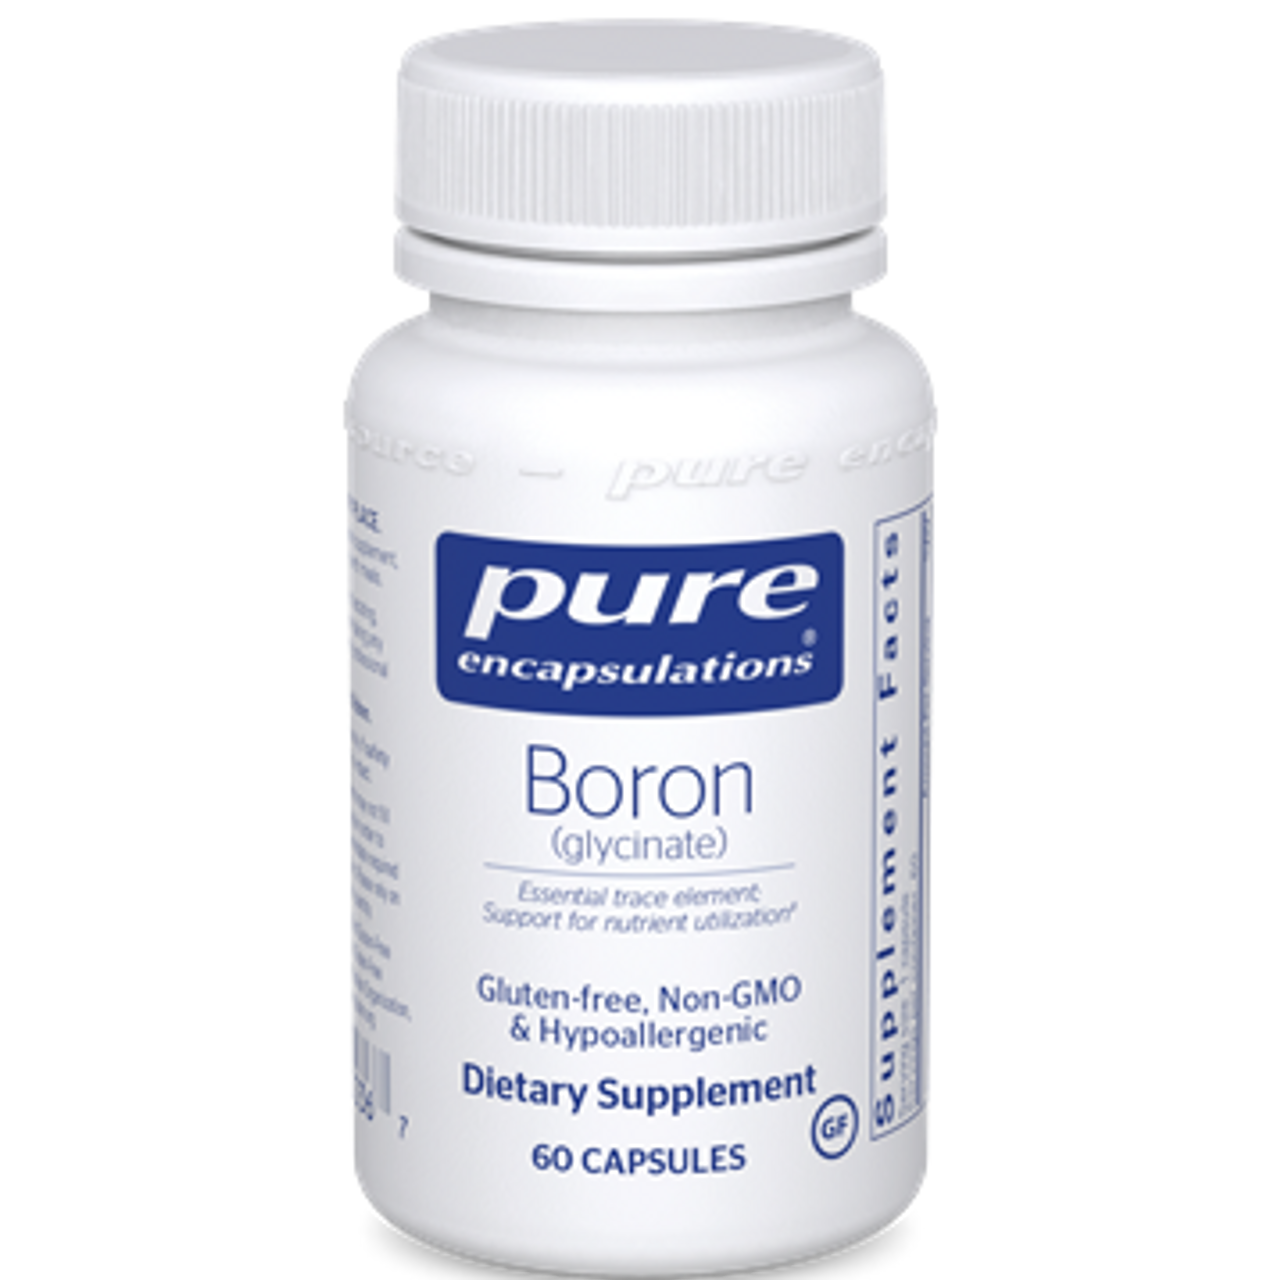 Pure Encapsulations Boron Glycinate 2 mg - #60 capsules 